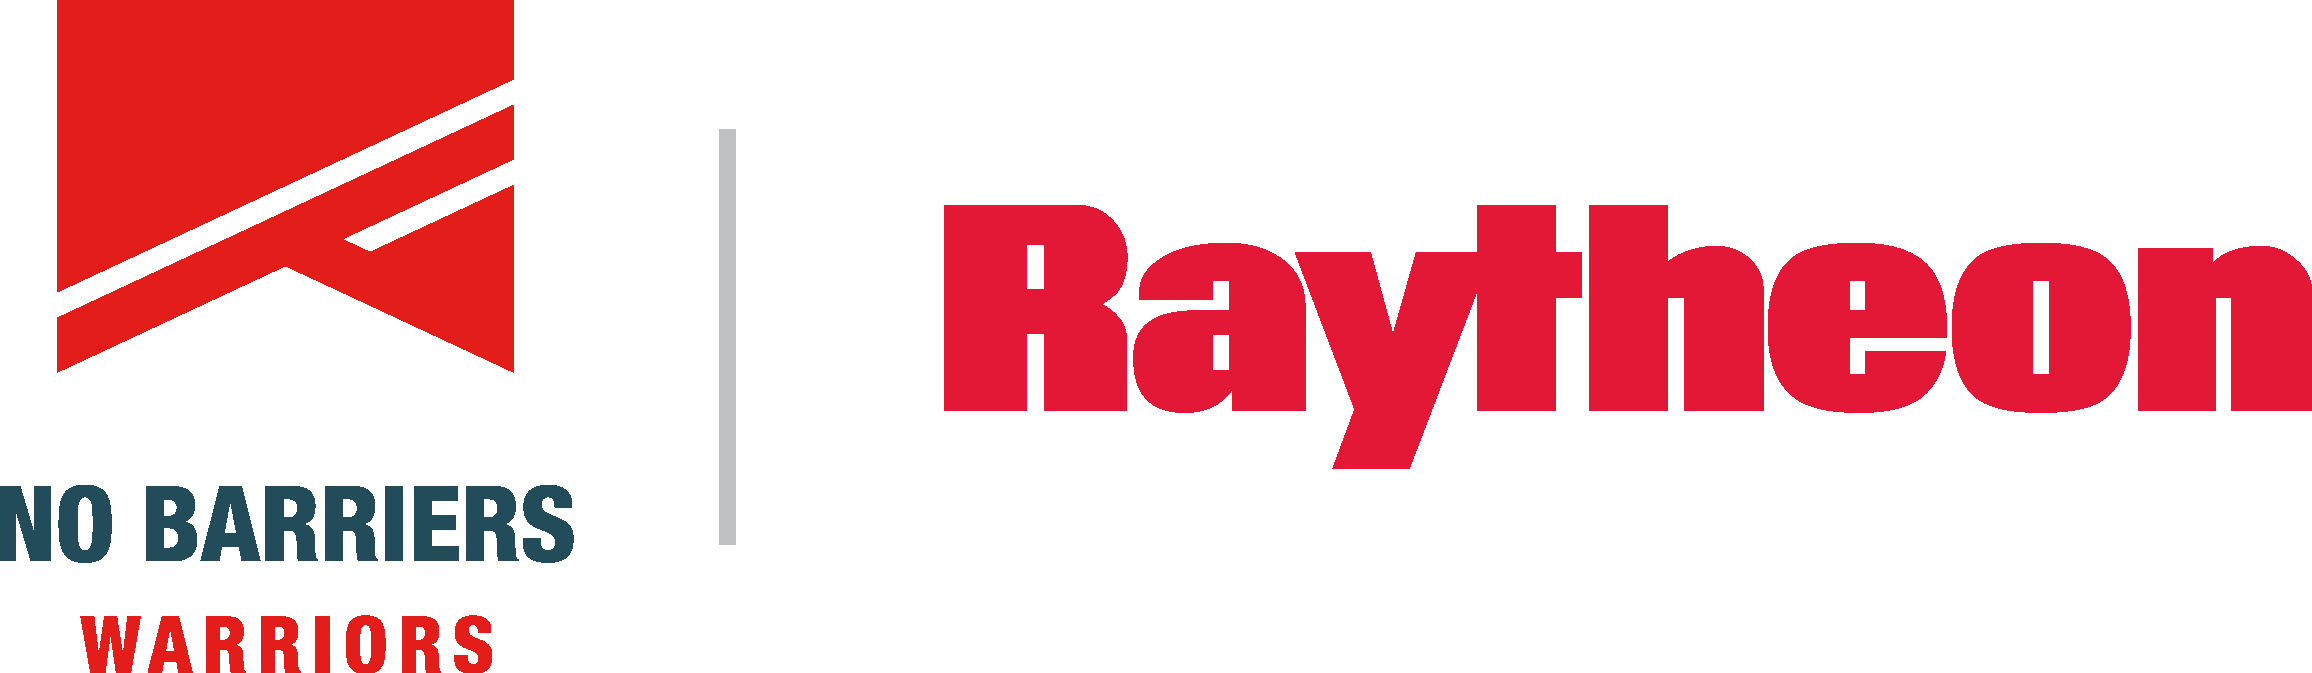 Raytheon Logo - 2018 Grand Canyon Veteran Wilderness Expedition | Sponsored by Raytheon